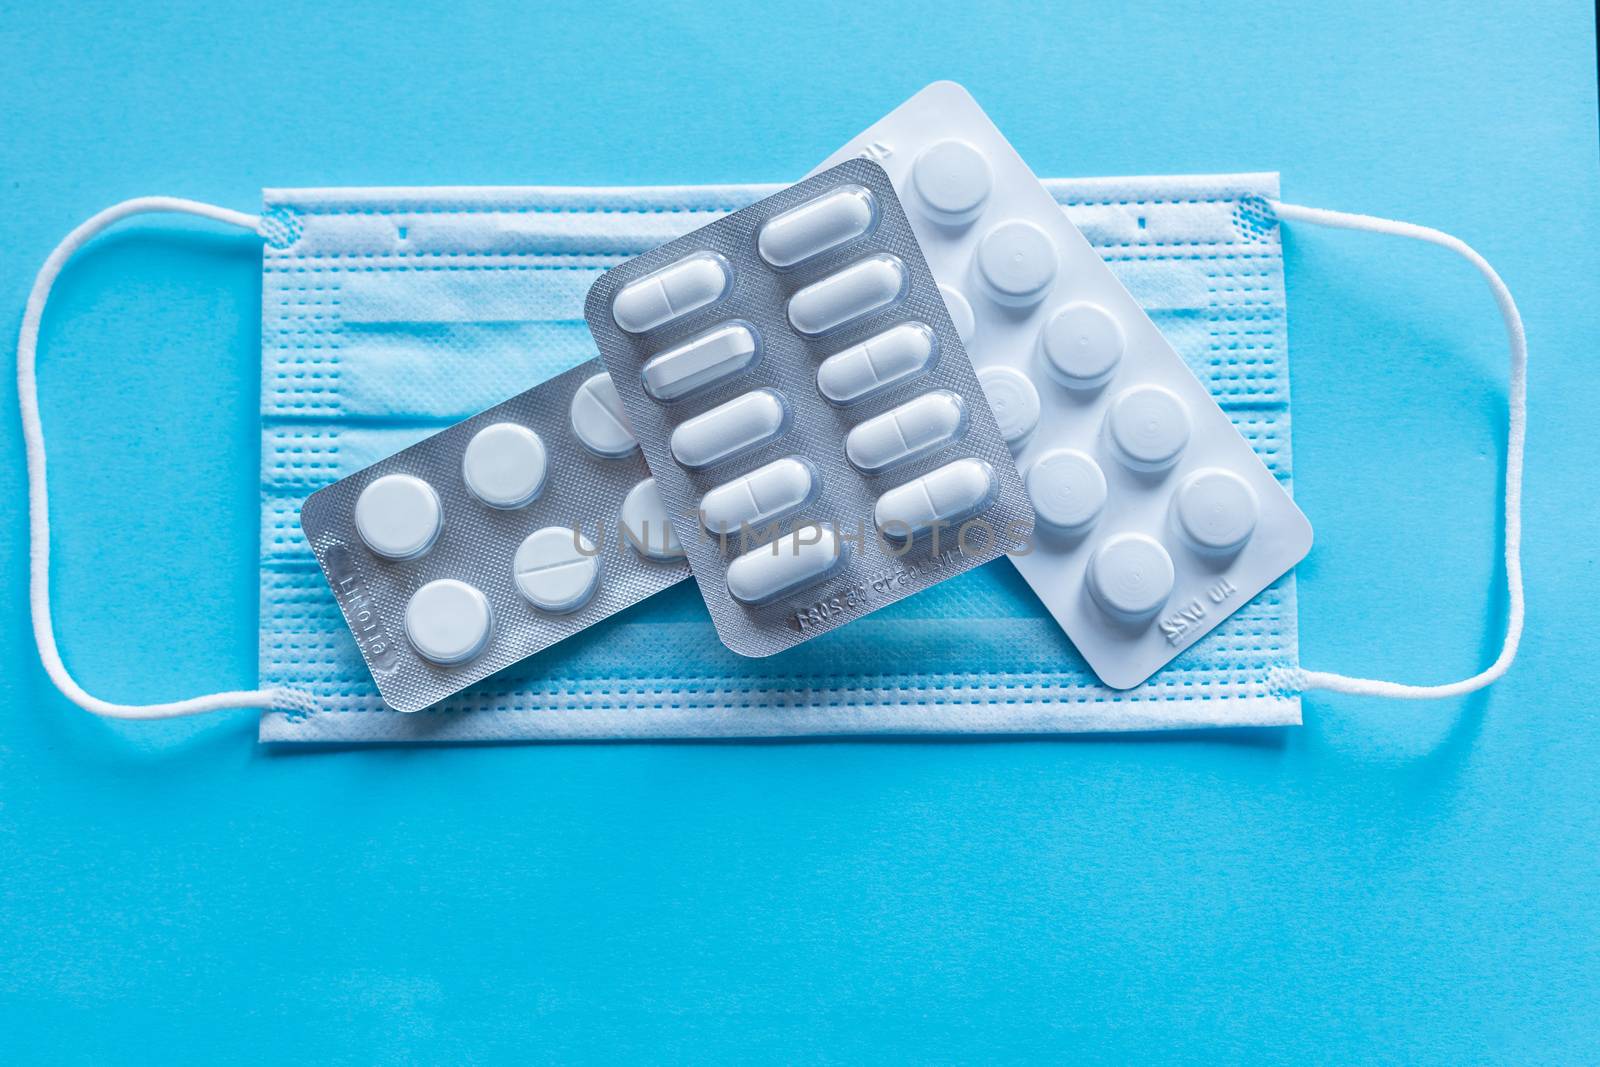 Health care prevention medical tablets pills on face mask - viru by adamr